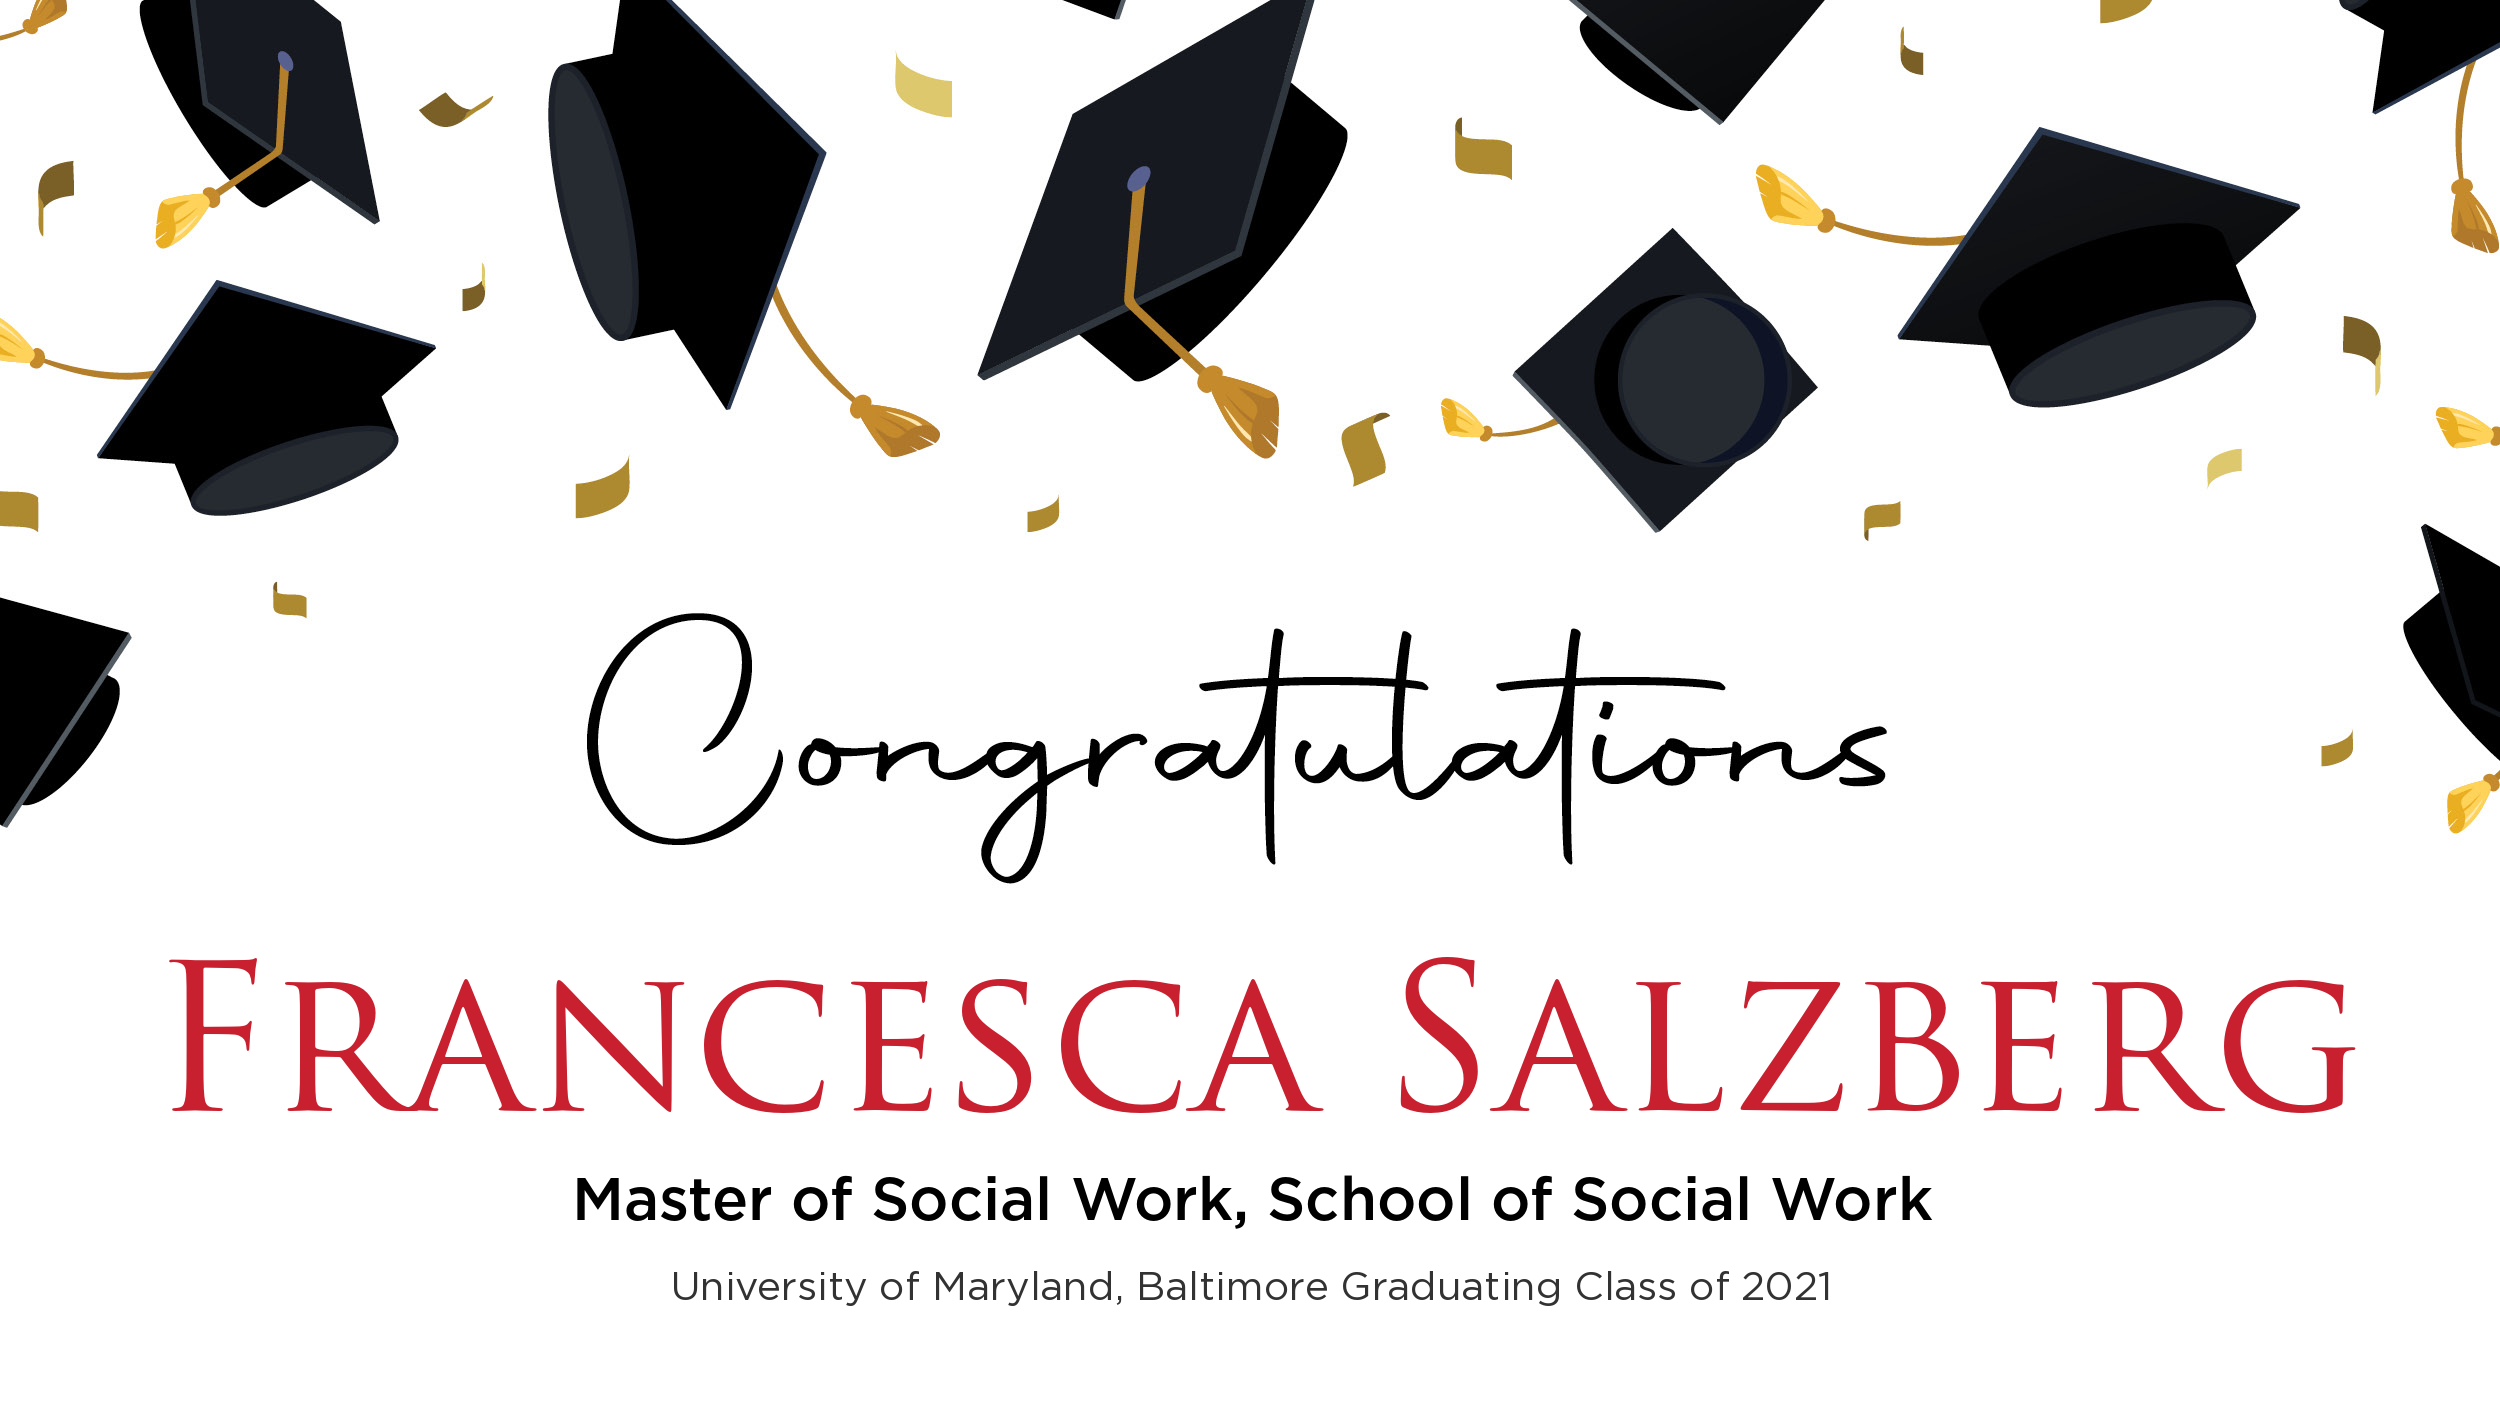 Congratulations Francesca Salzberg, Master of Social Work